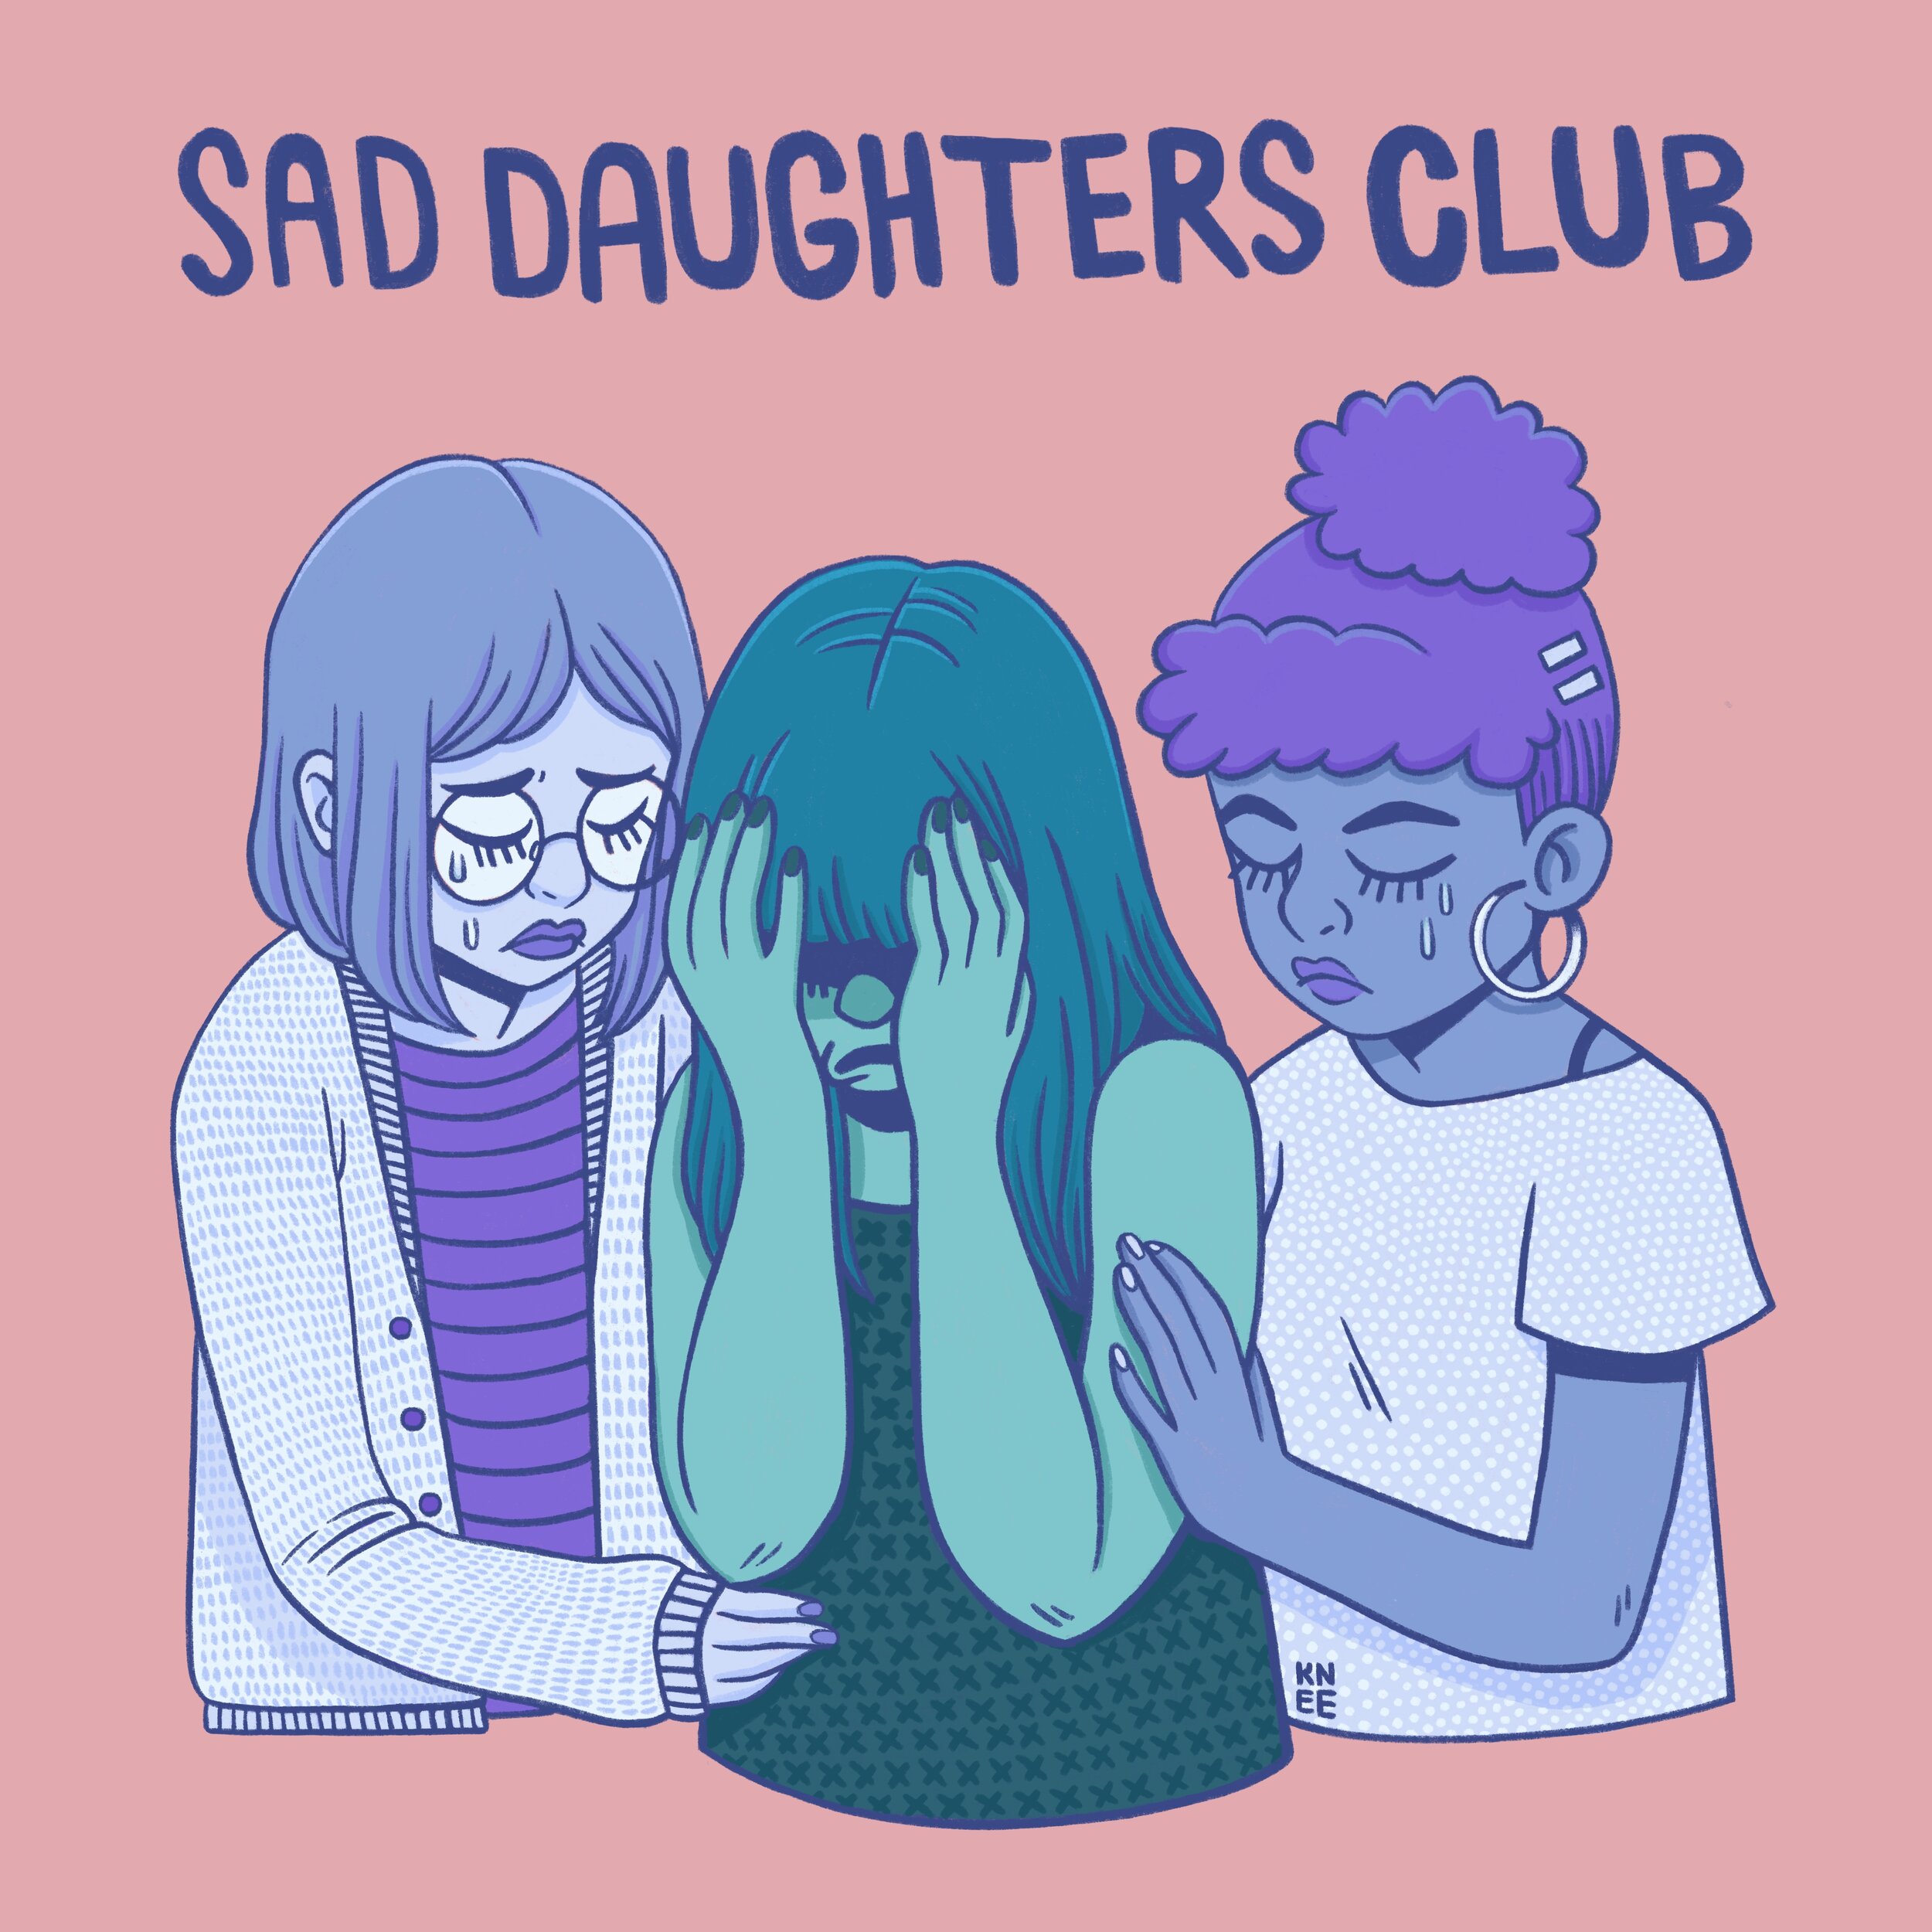 Sad Daughters Club.jpg